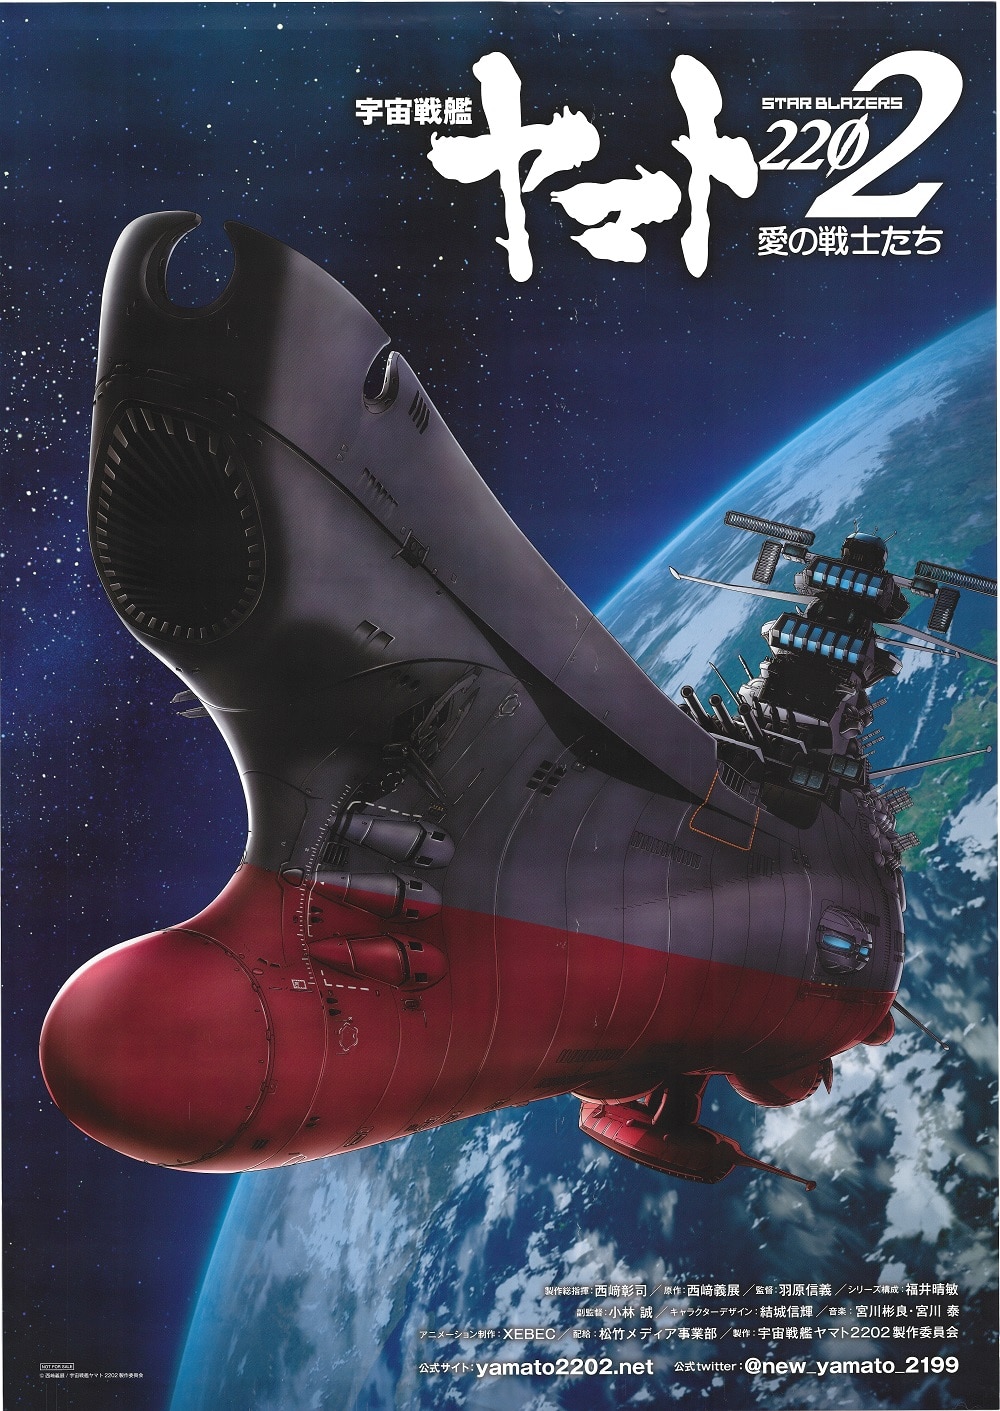 Xebec Bonus Item For Yoshi Nishizaki Exhibition Space Battleship Yamato Uchu Senkan Yamato 22 Love Of Warriors B2 Poster Mandarake Online Shop